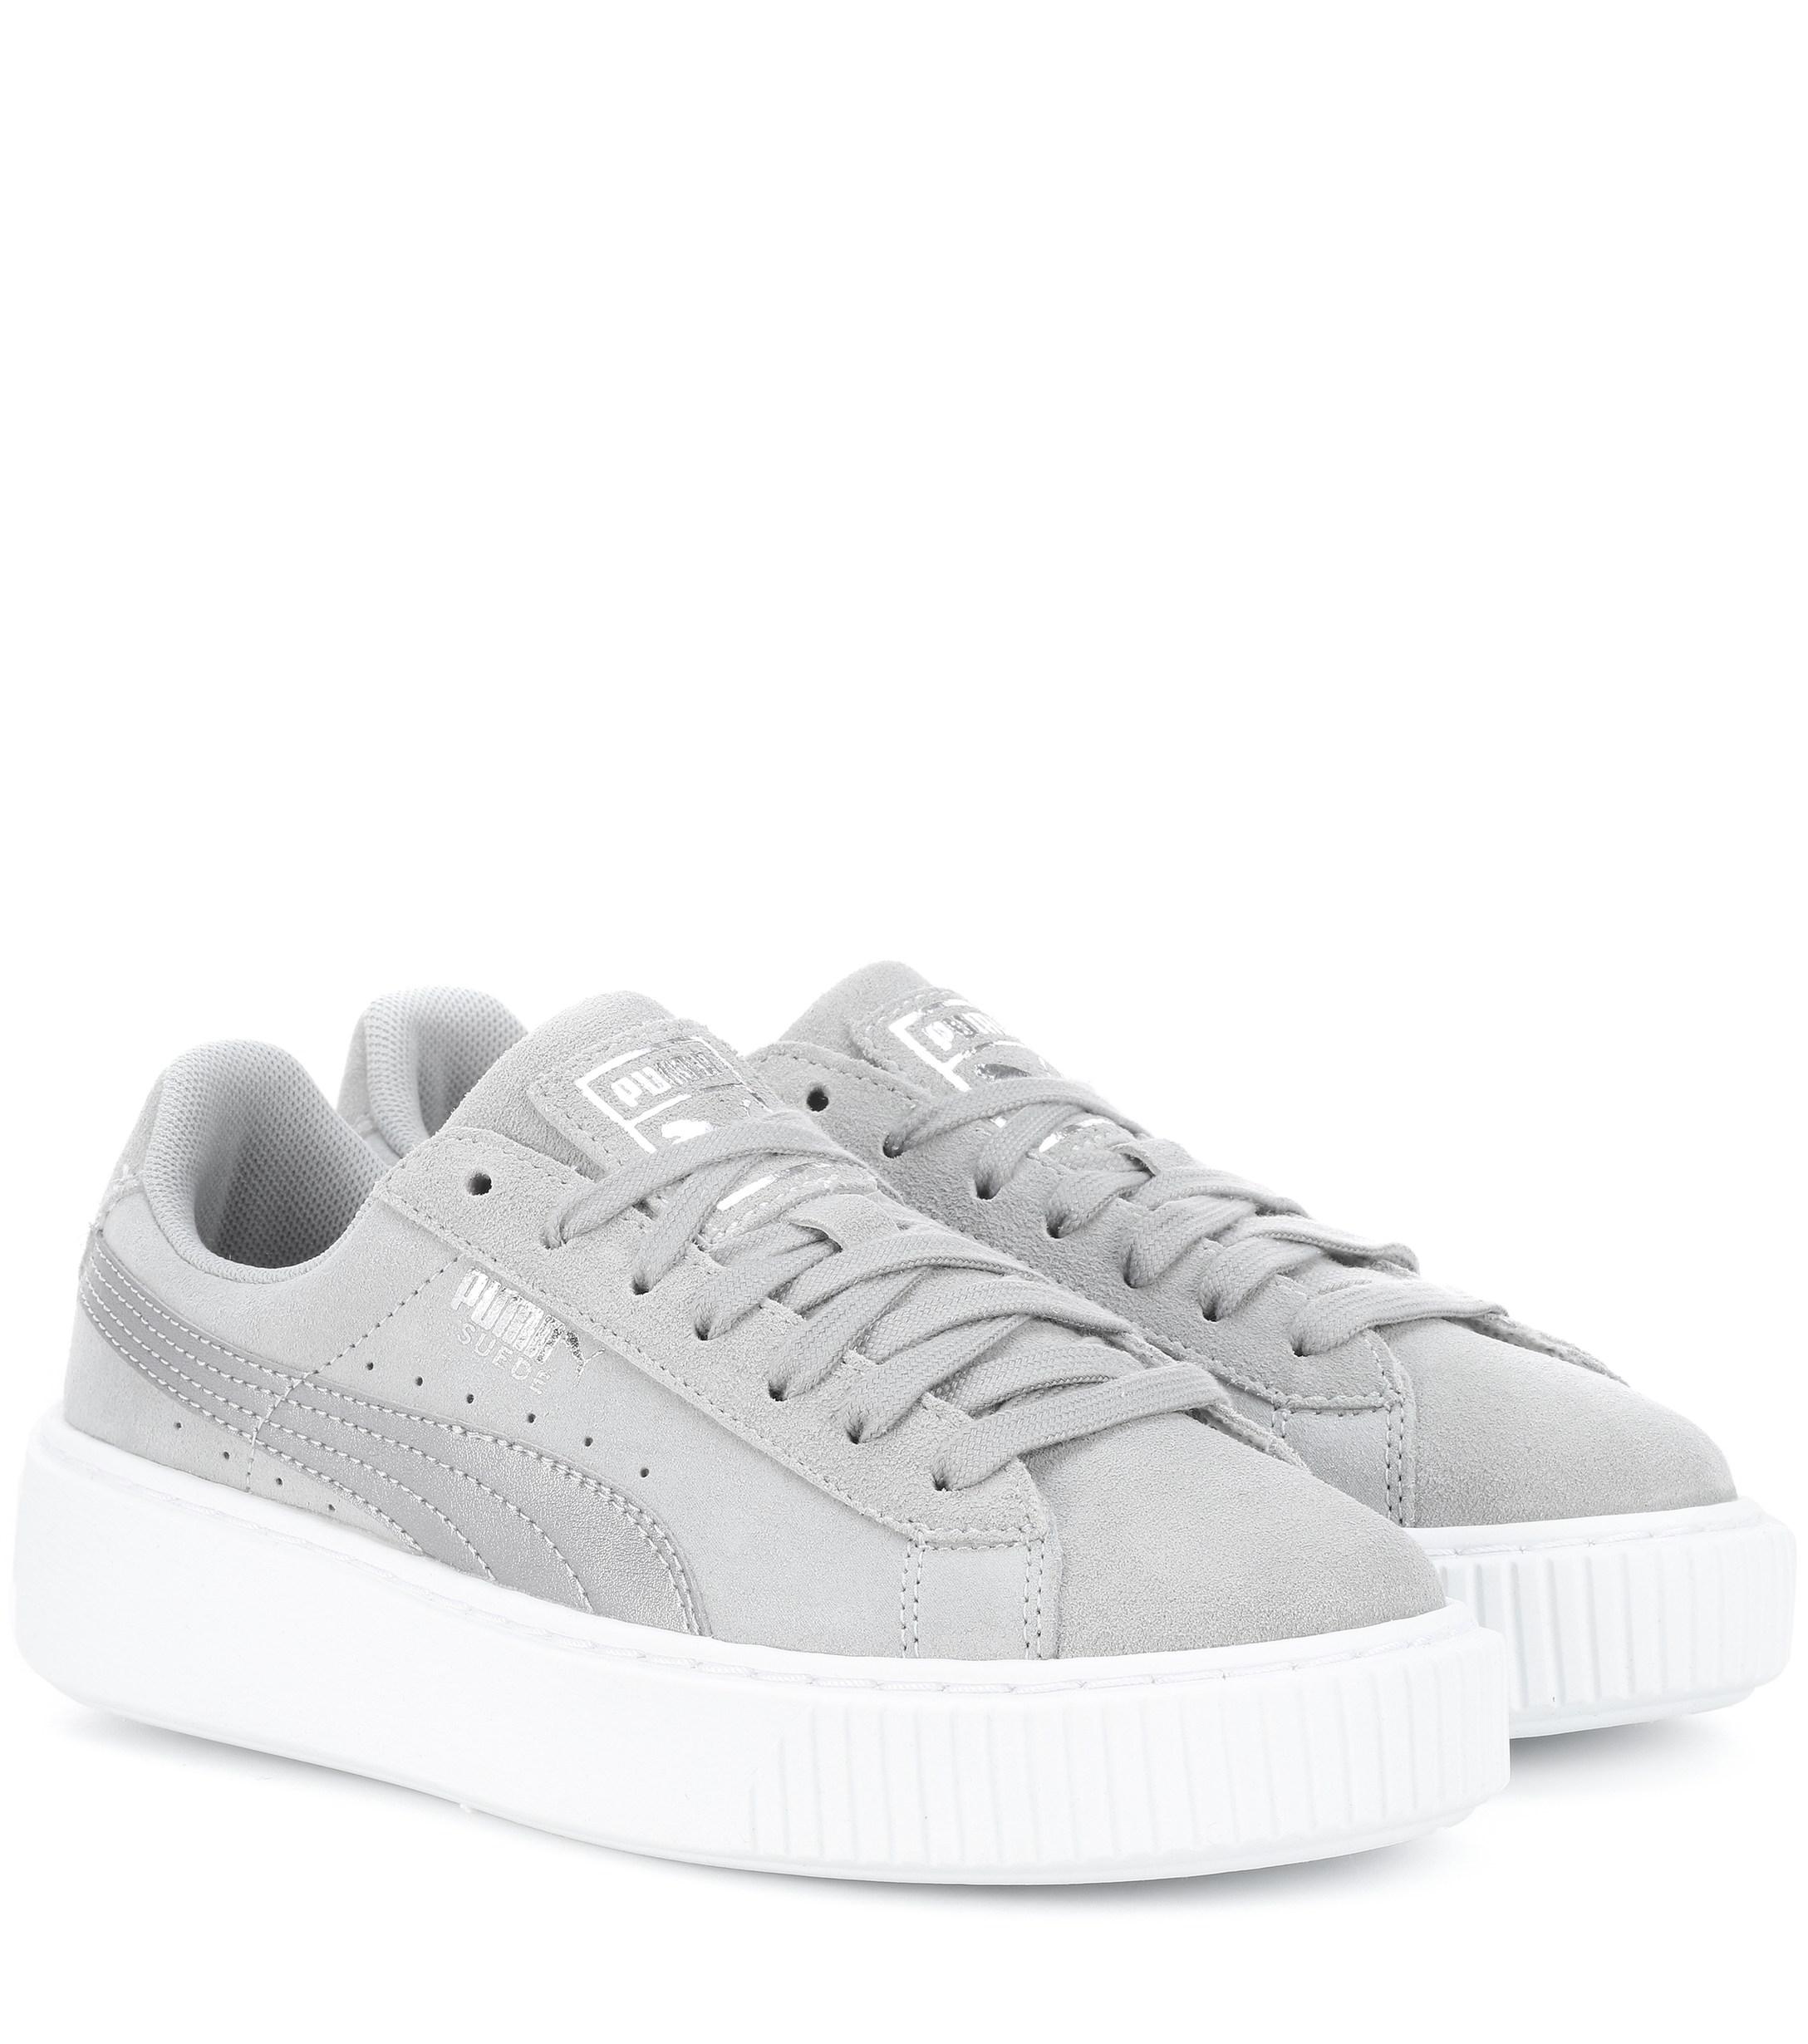 grey puma platform sneakers